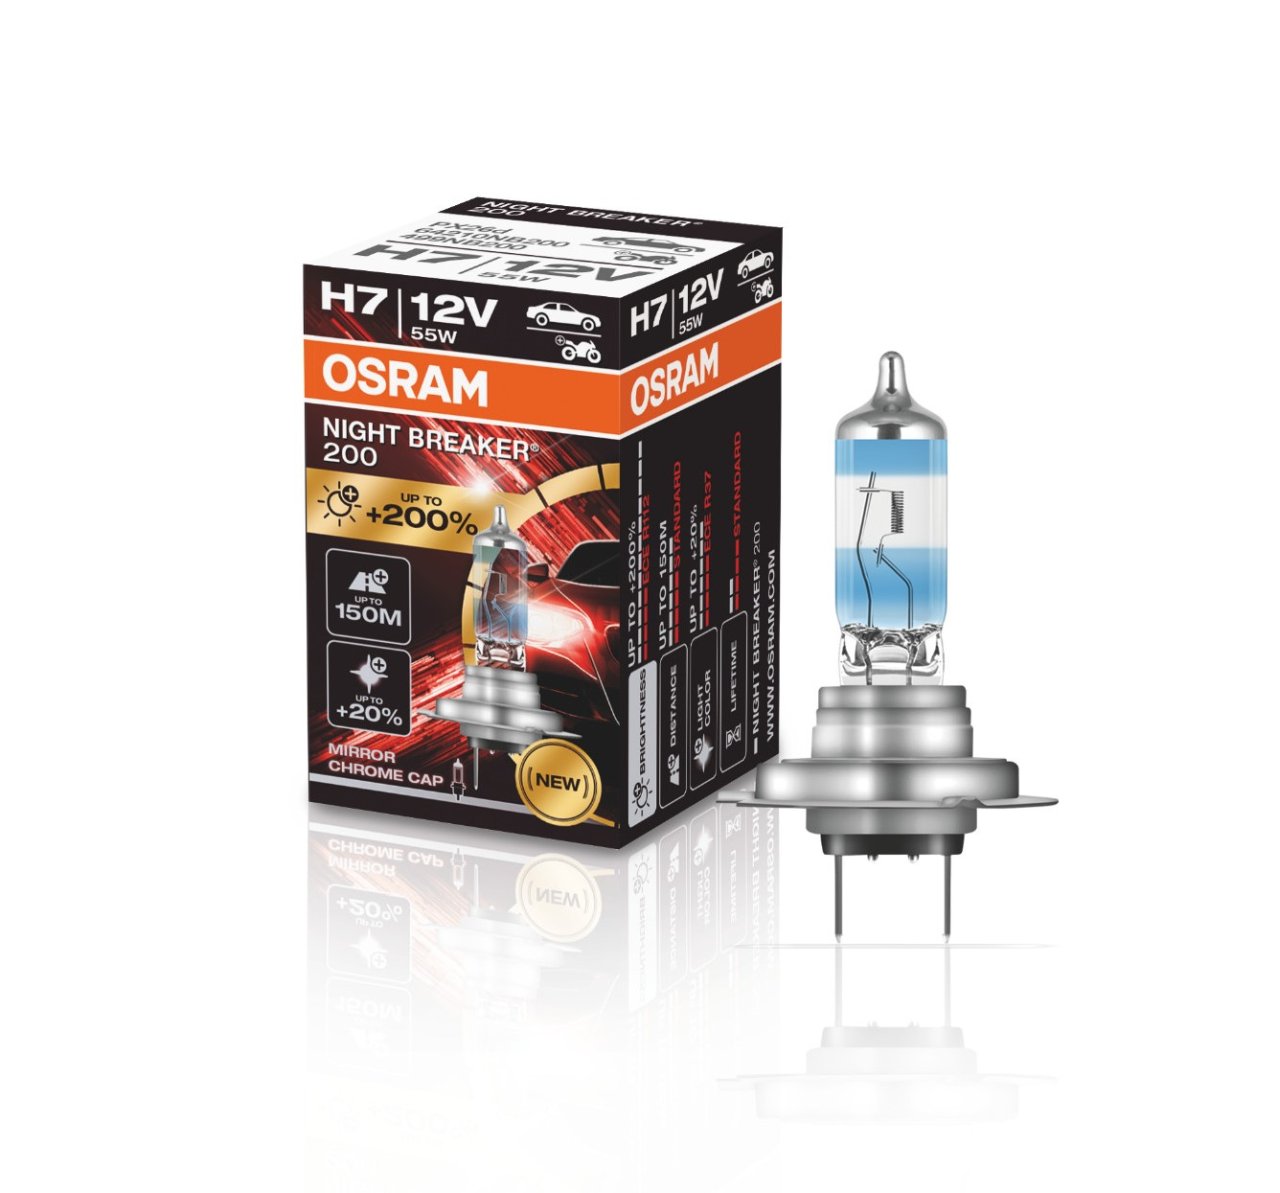 لامپ هالوژن پایه H7 مدل نایت بریکر لیزر NBL 200% اسرام – Osram (تکی)